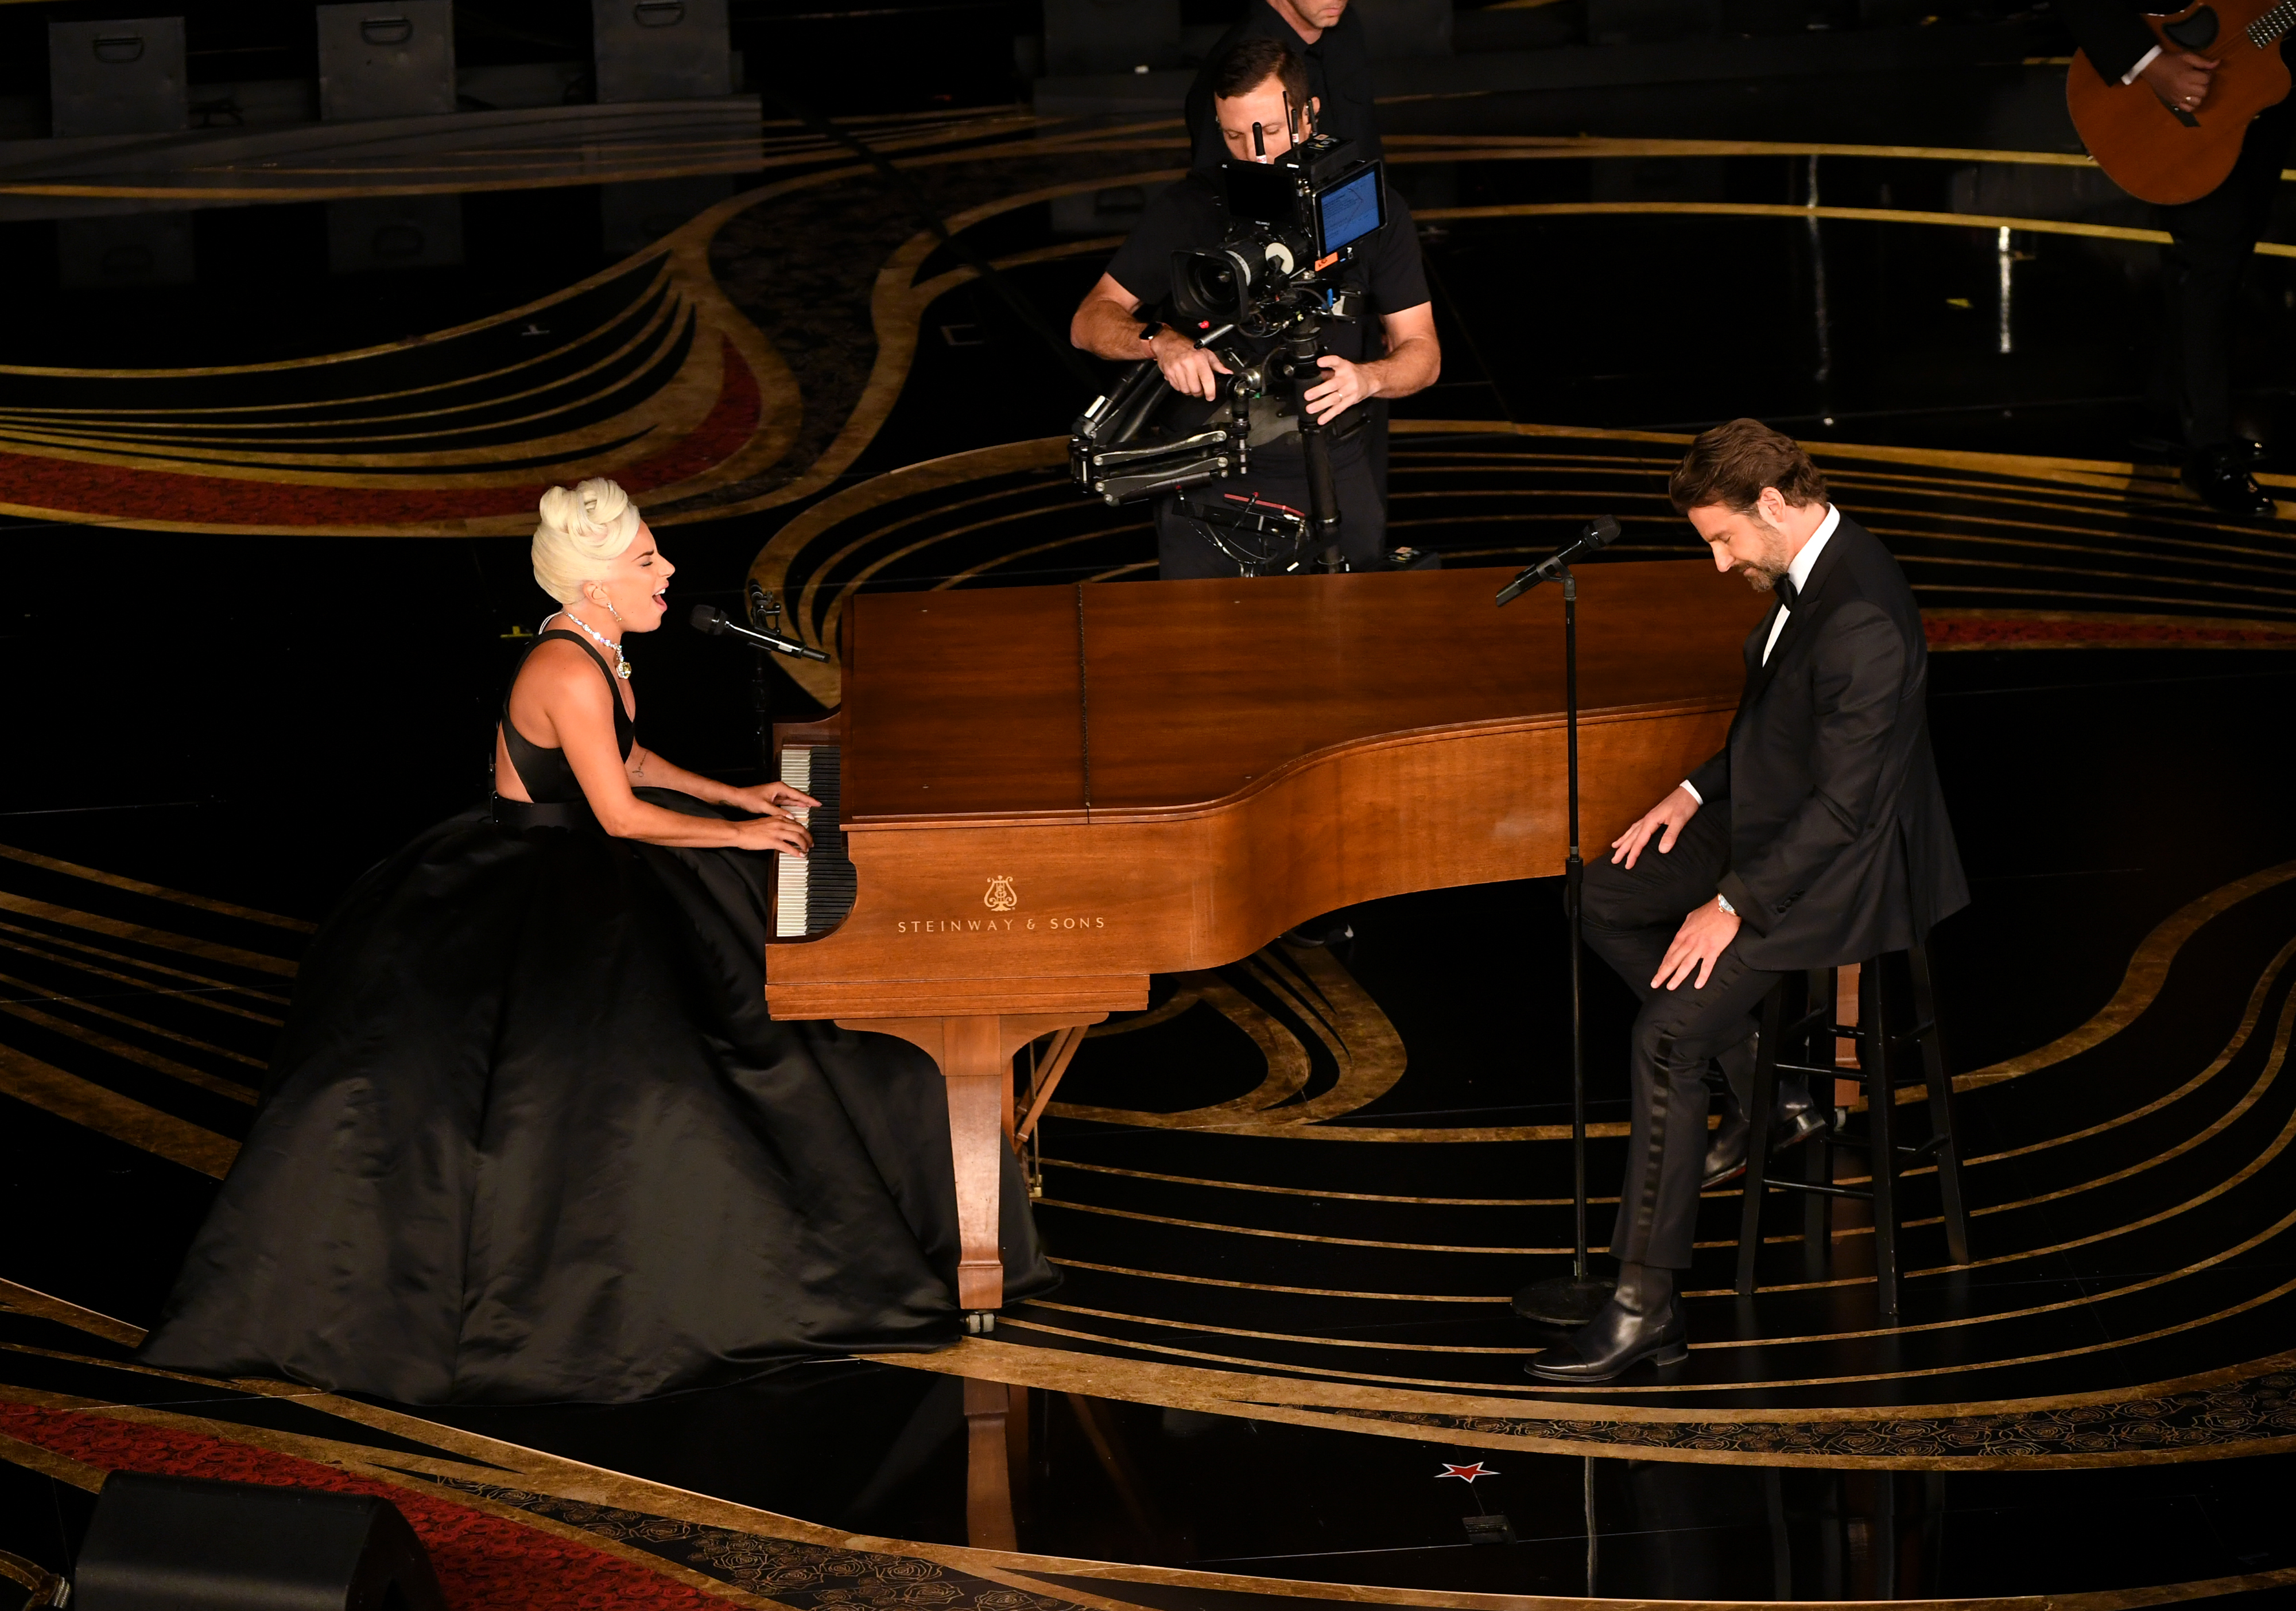 ¡Bradley Cooper y Lady Gaga tocan "Shallow" en los Oscar 2019!